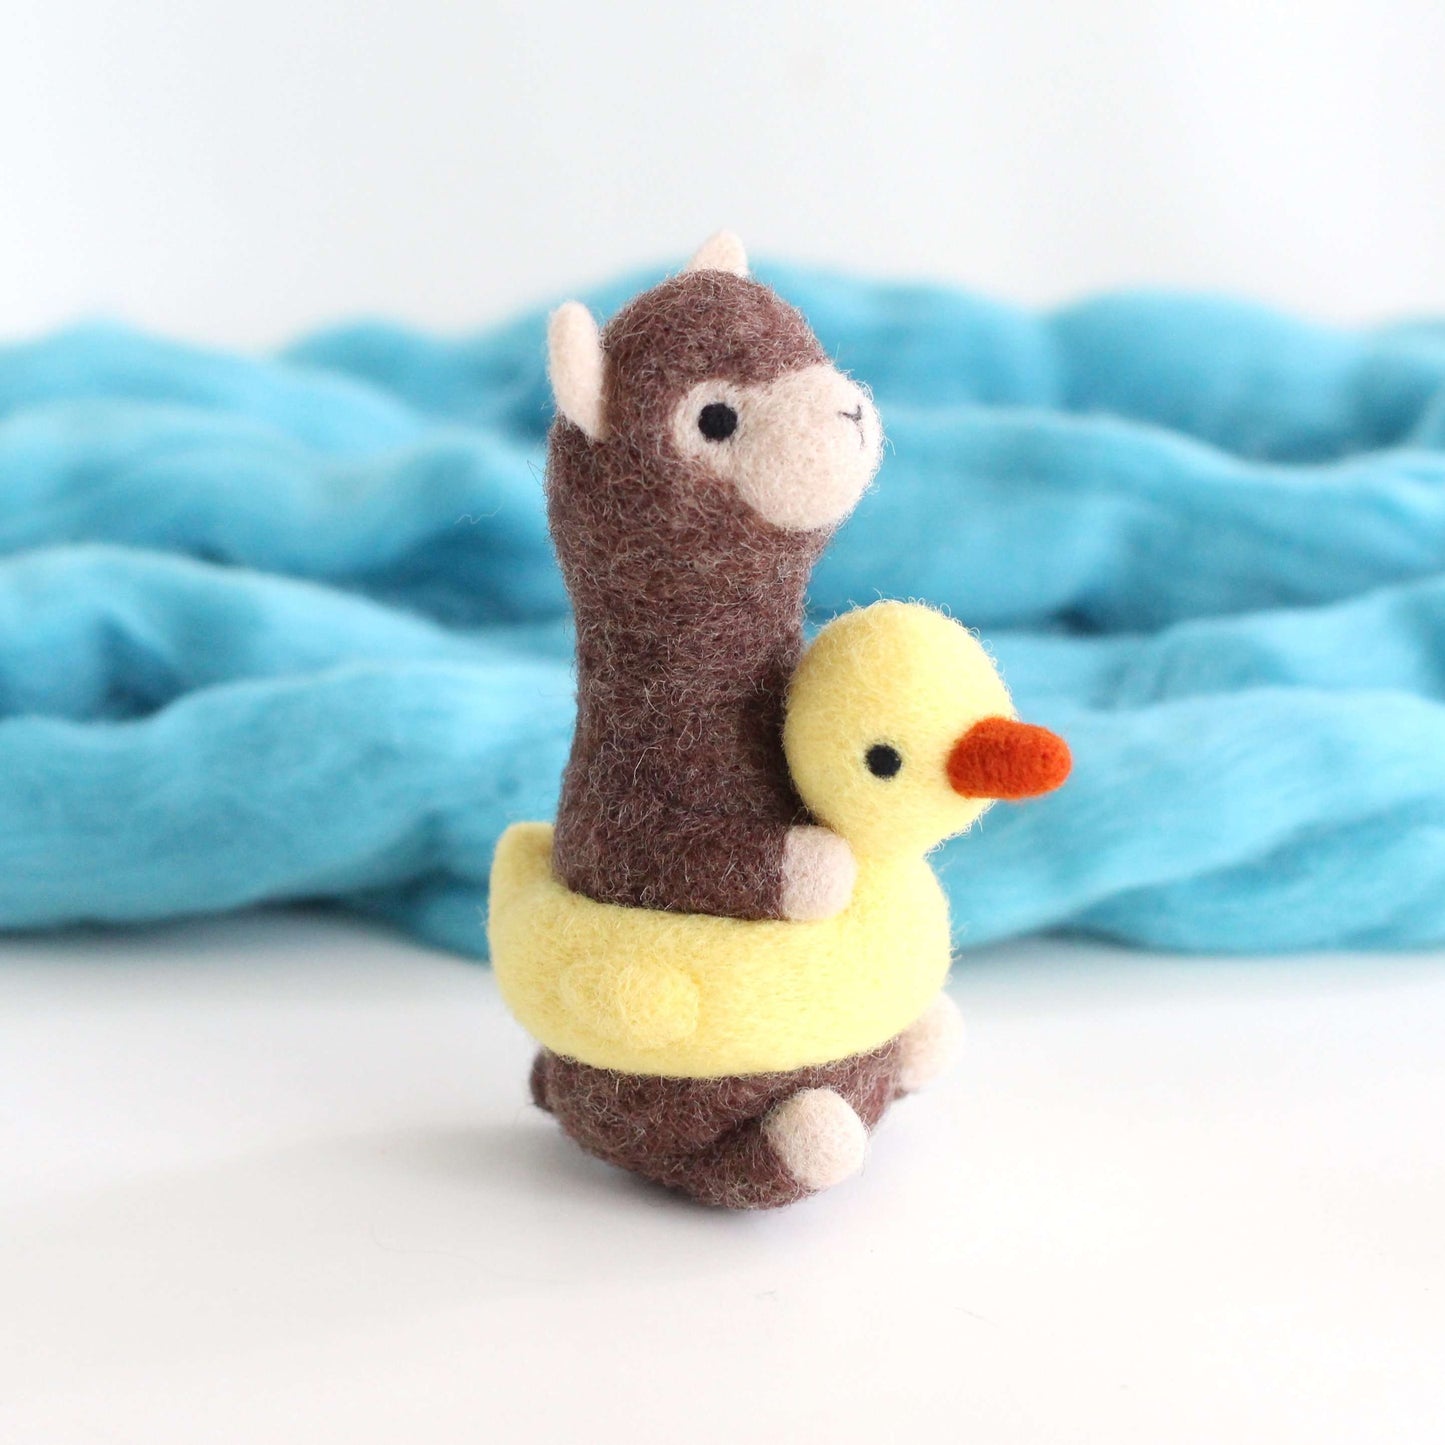 Needle Felted Alpaca in a Duck Floatie by Wild Whimsy Woolies